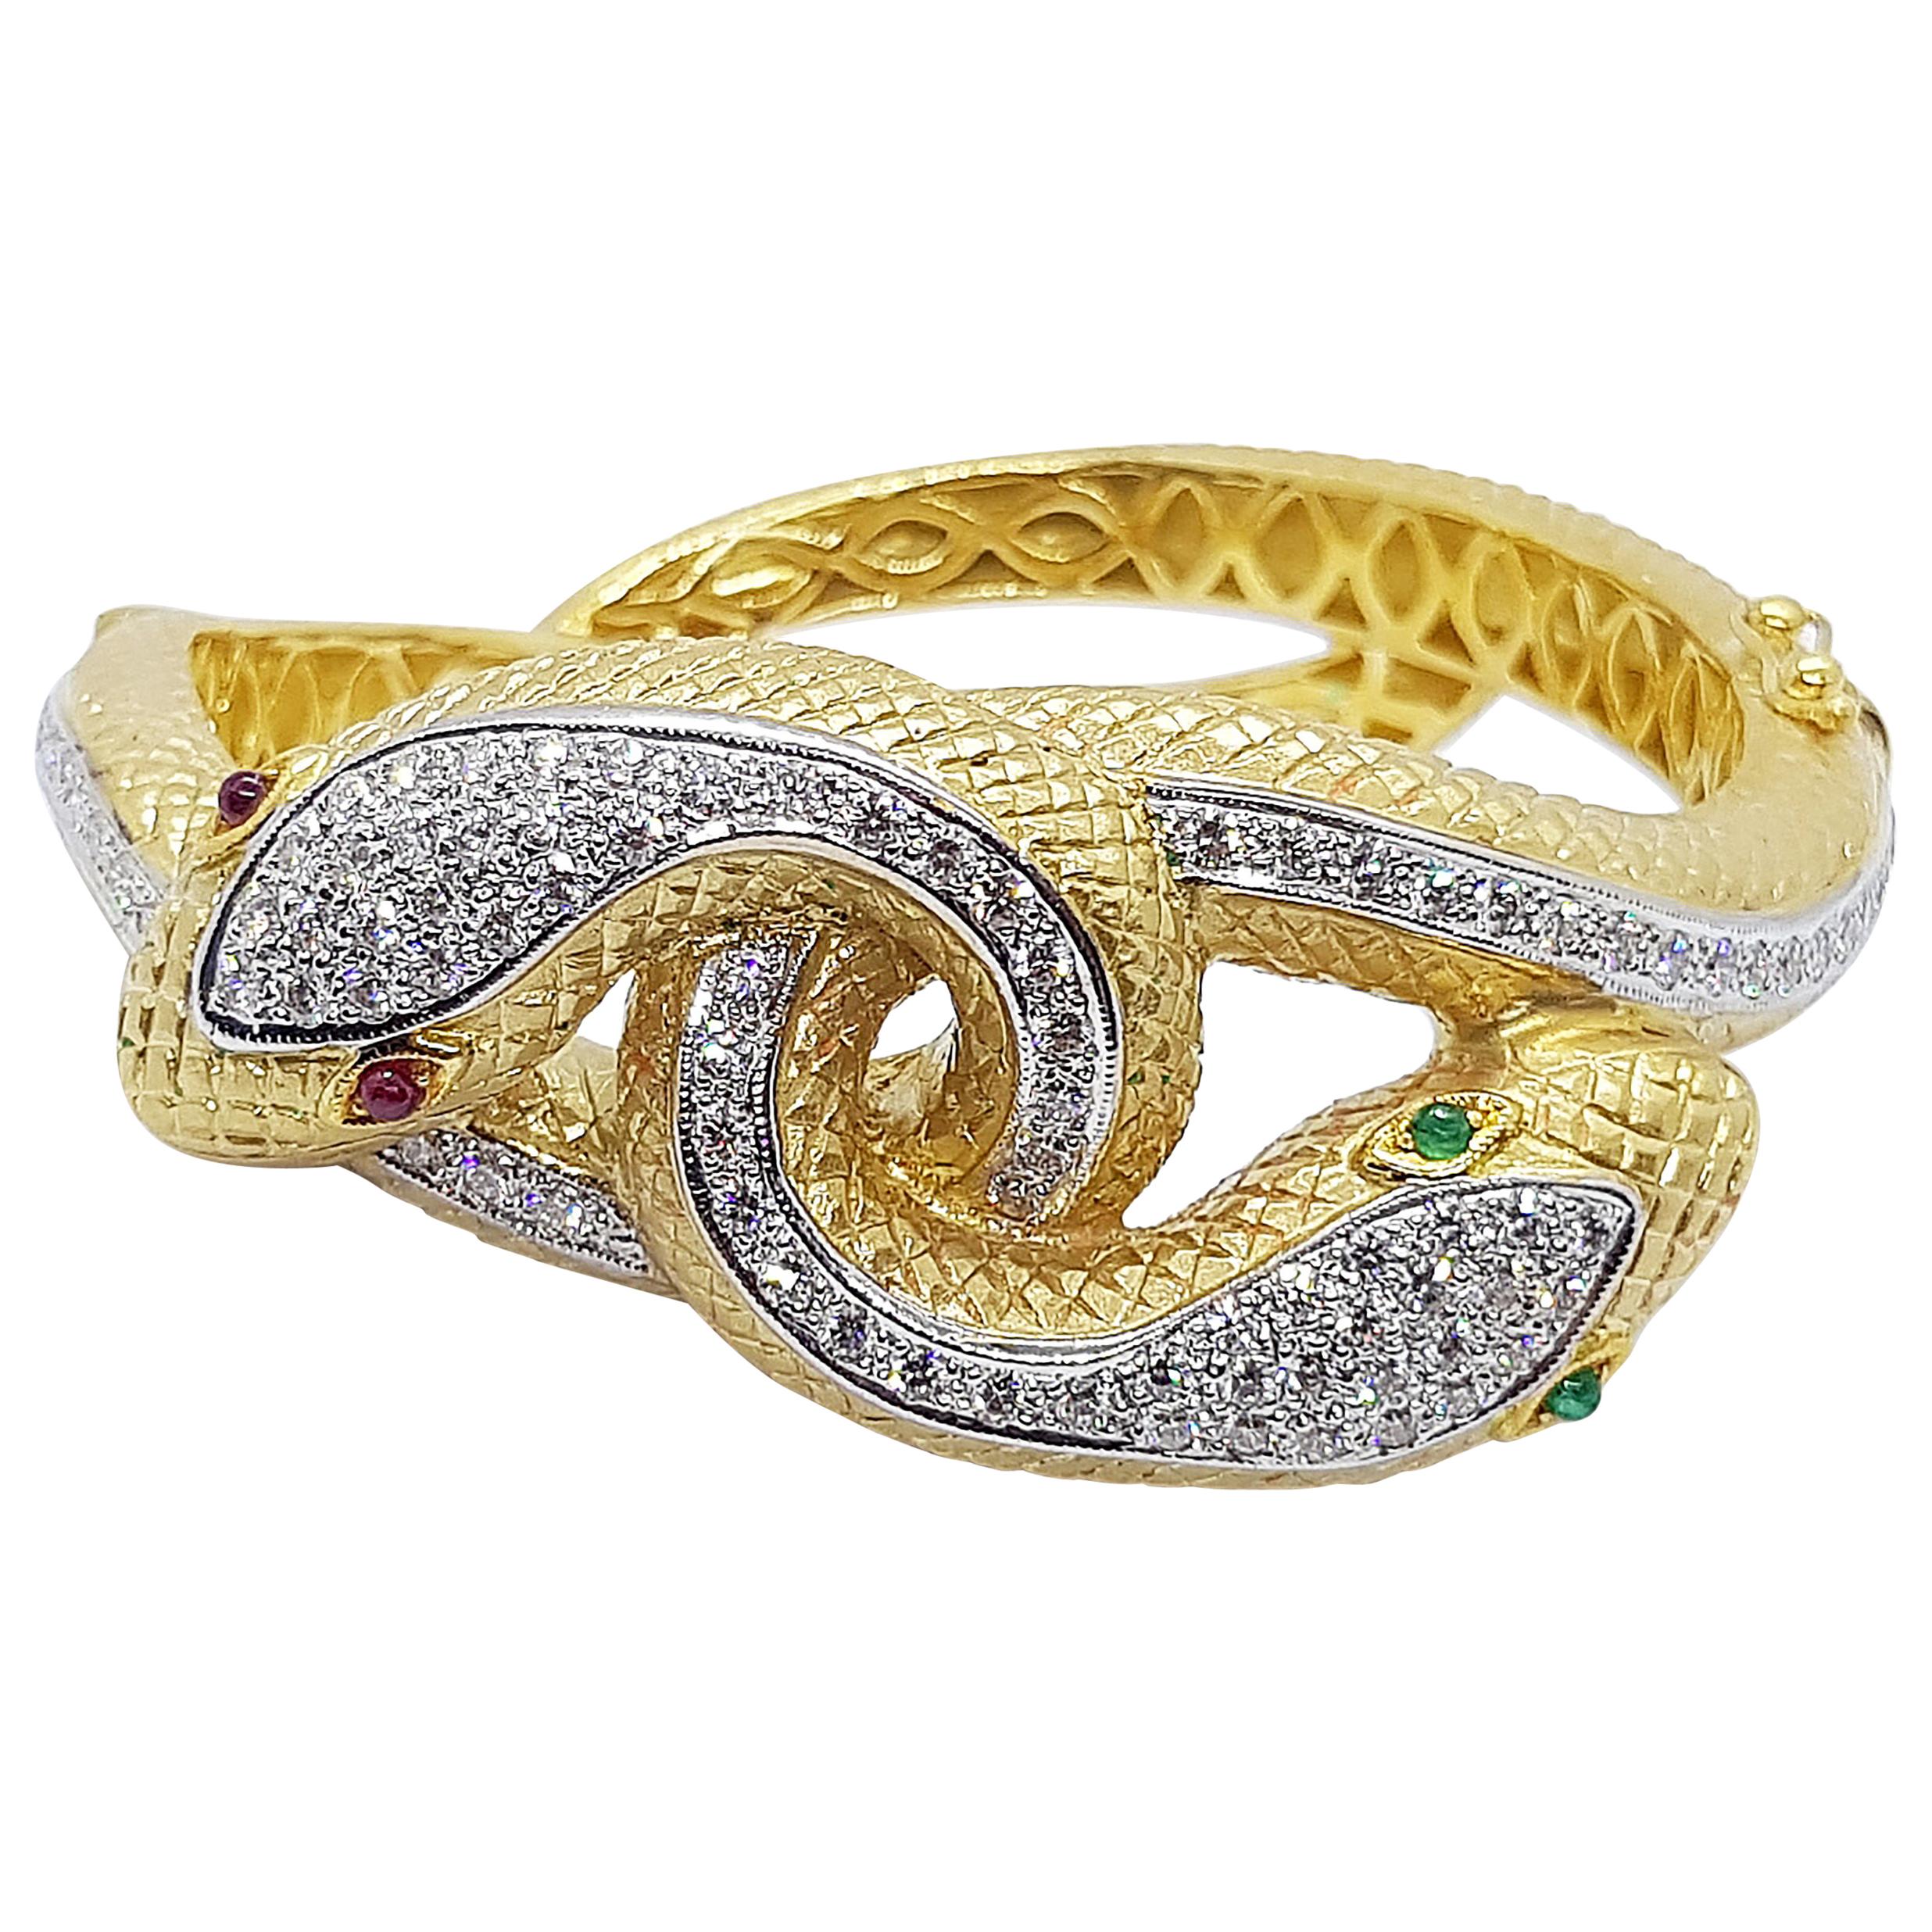 Cabochon Ruby, Cabochon Emerald and Diamond Snake Bangle Set in 18 Karat Gold